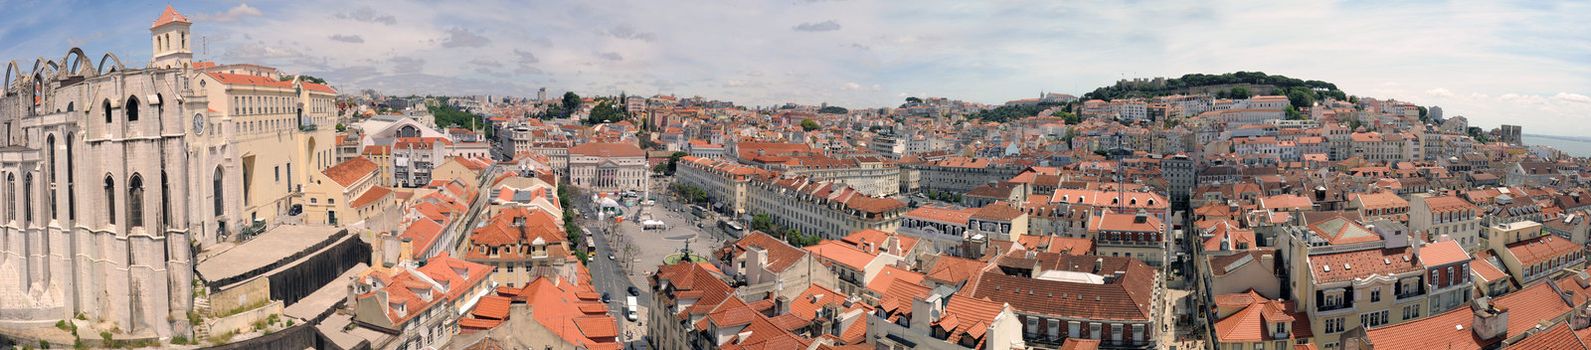 panarama of Lisbon, capital of the Portugal